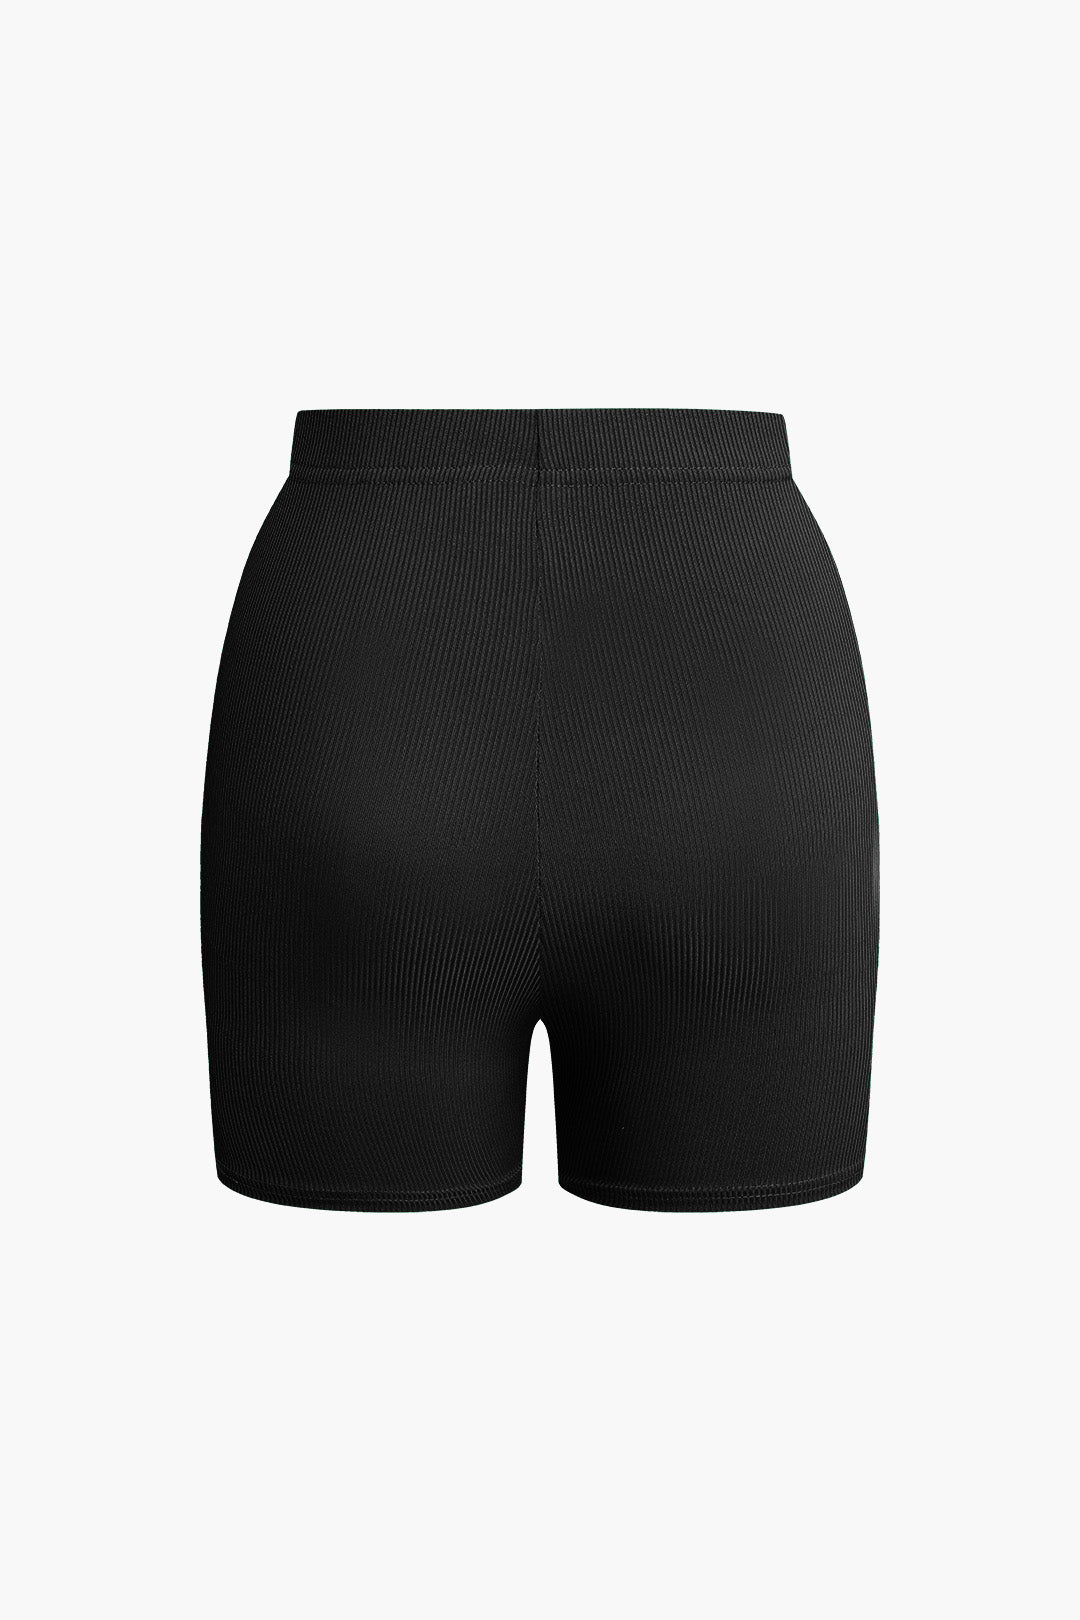 Basic Solid Cami Top And Shorts Set